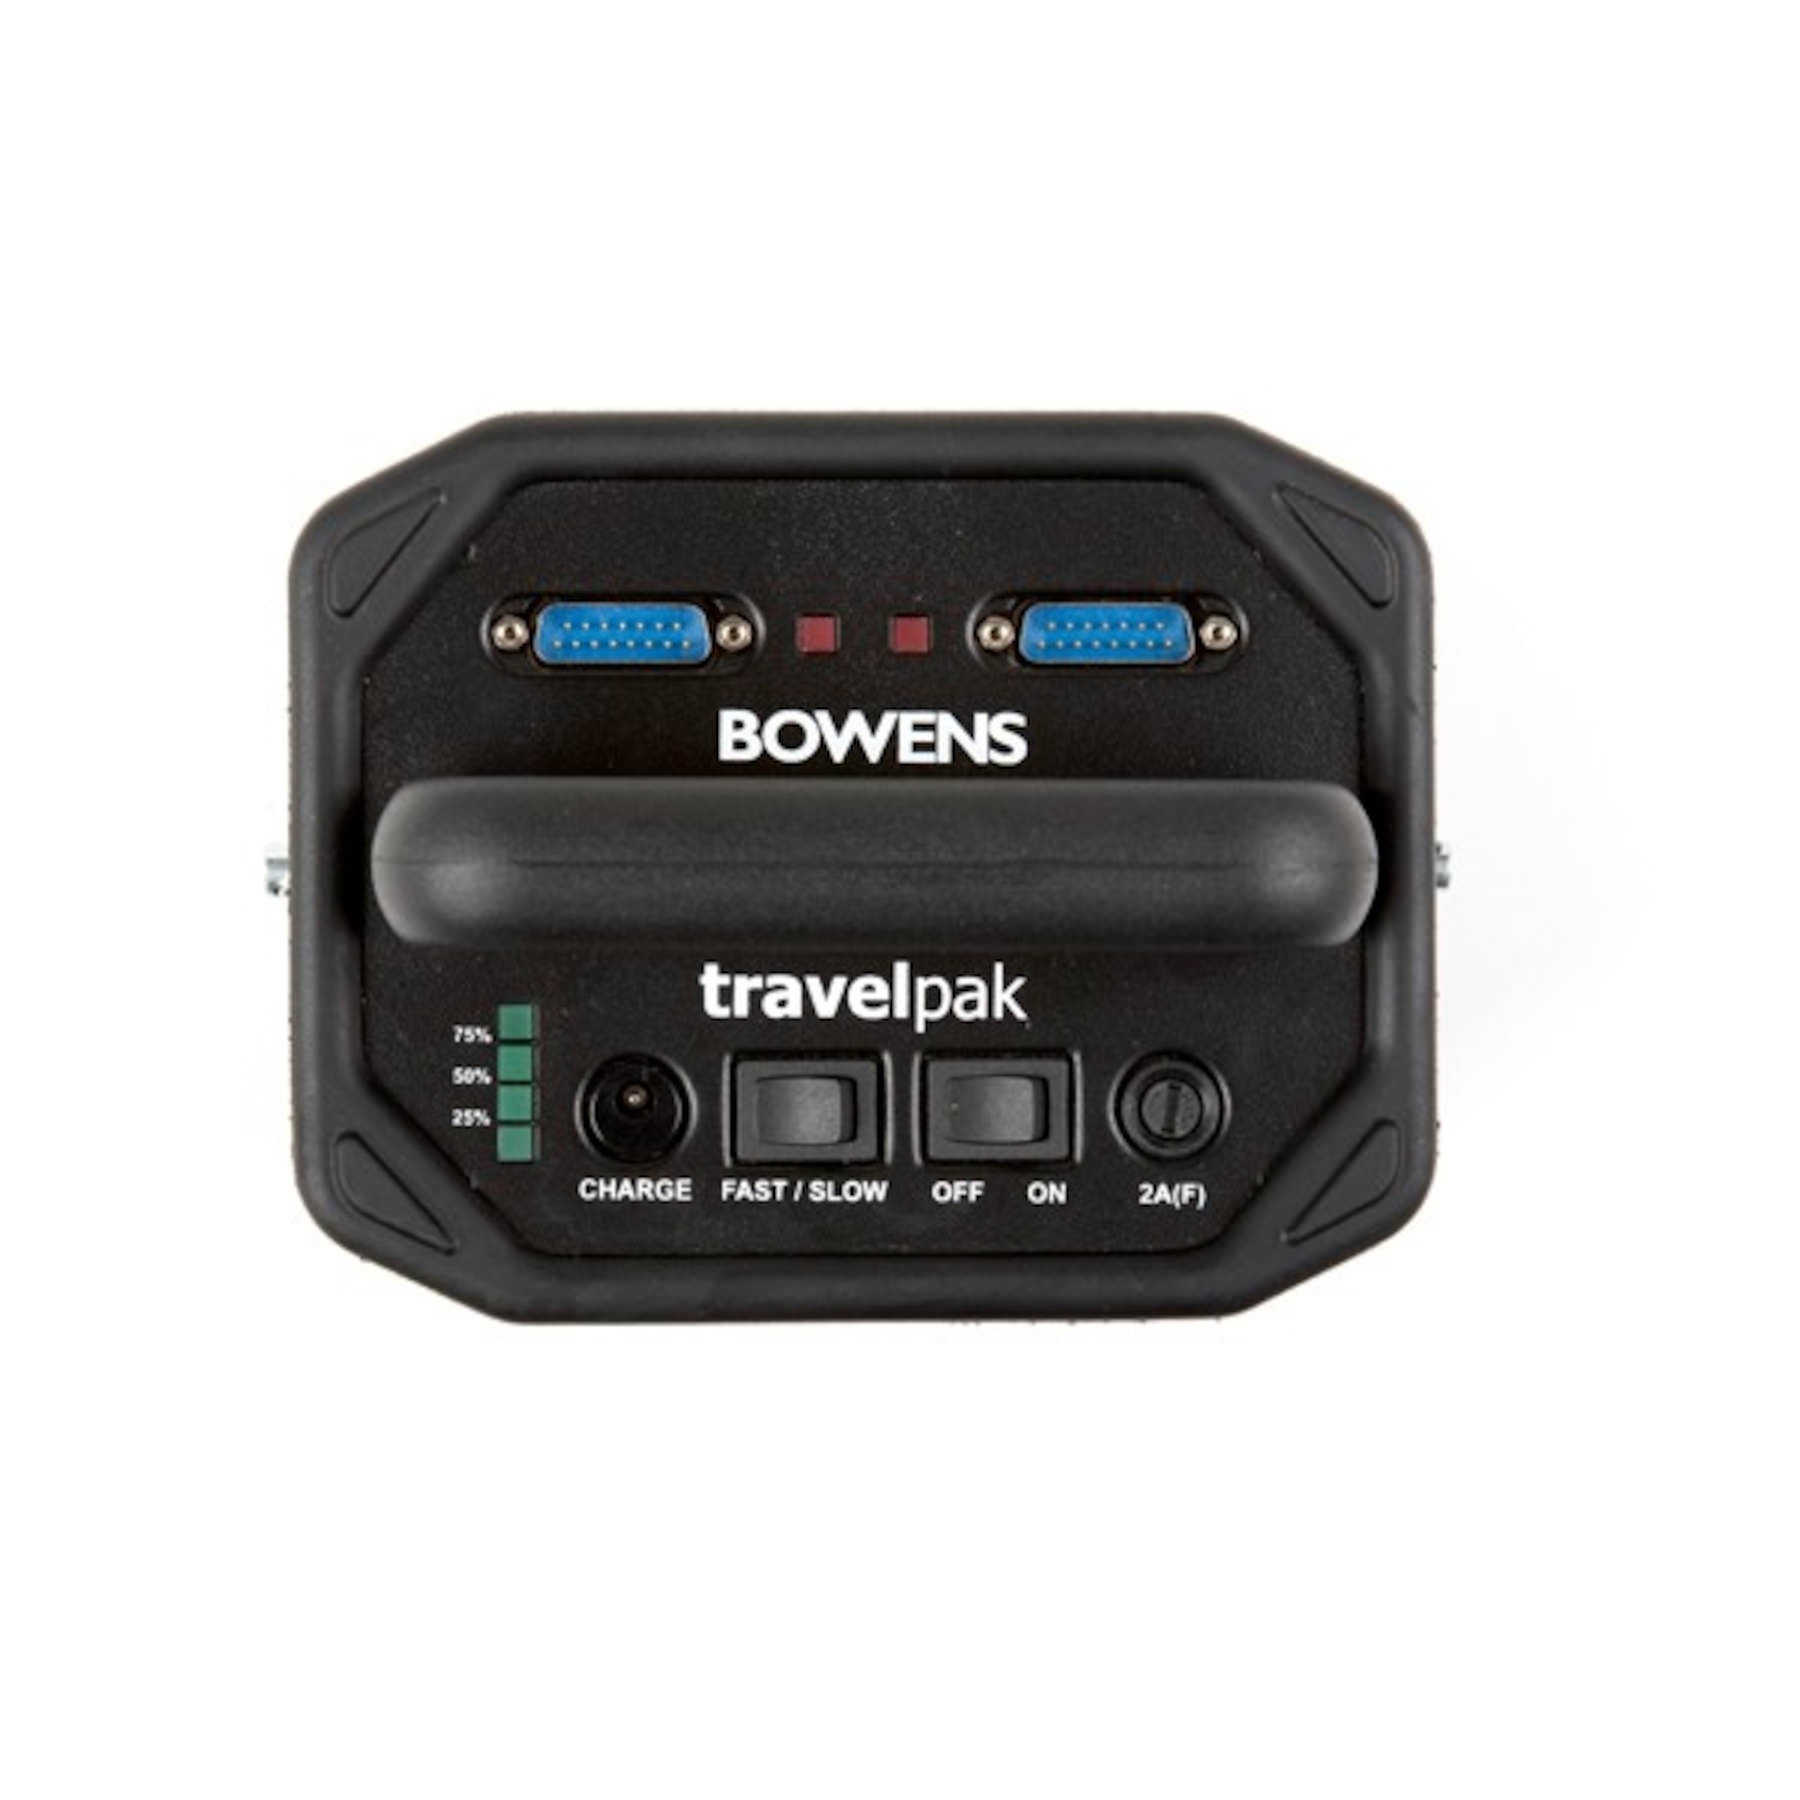 Bowens Travelpak Control Panel